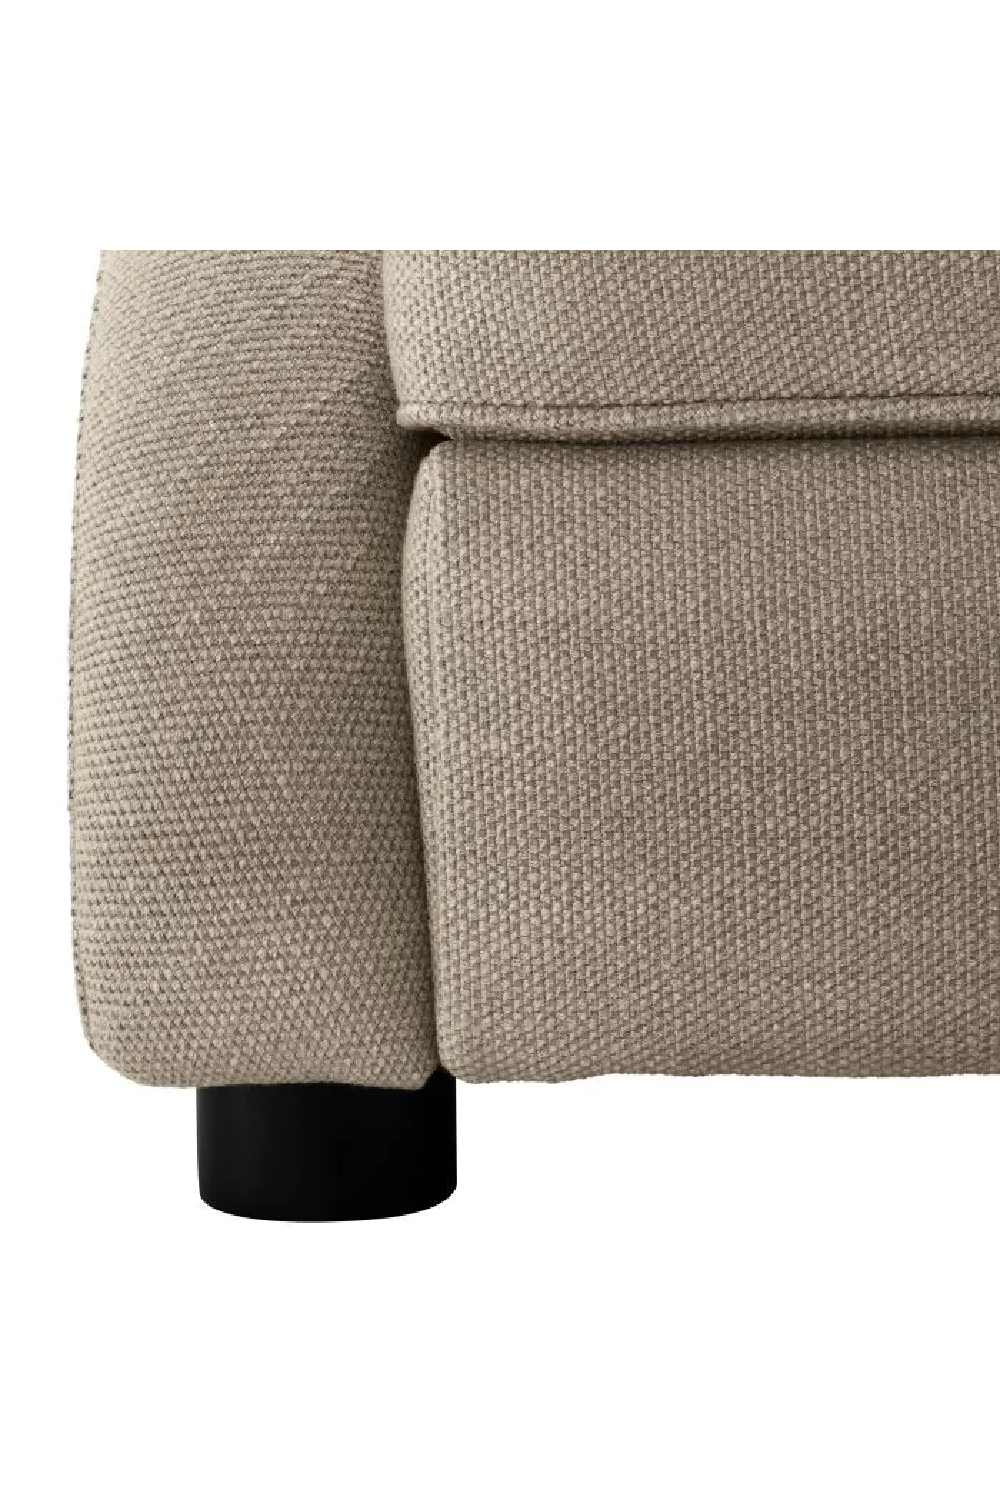 Sloped Arms Accent Chair | Eichholtz Cruz | Oroa.com